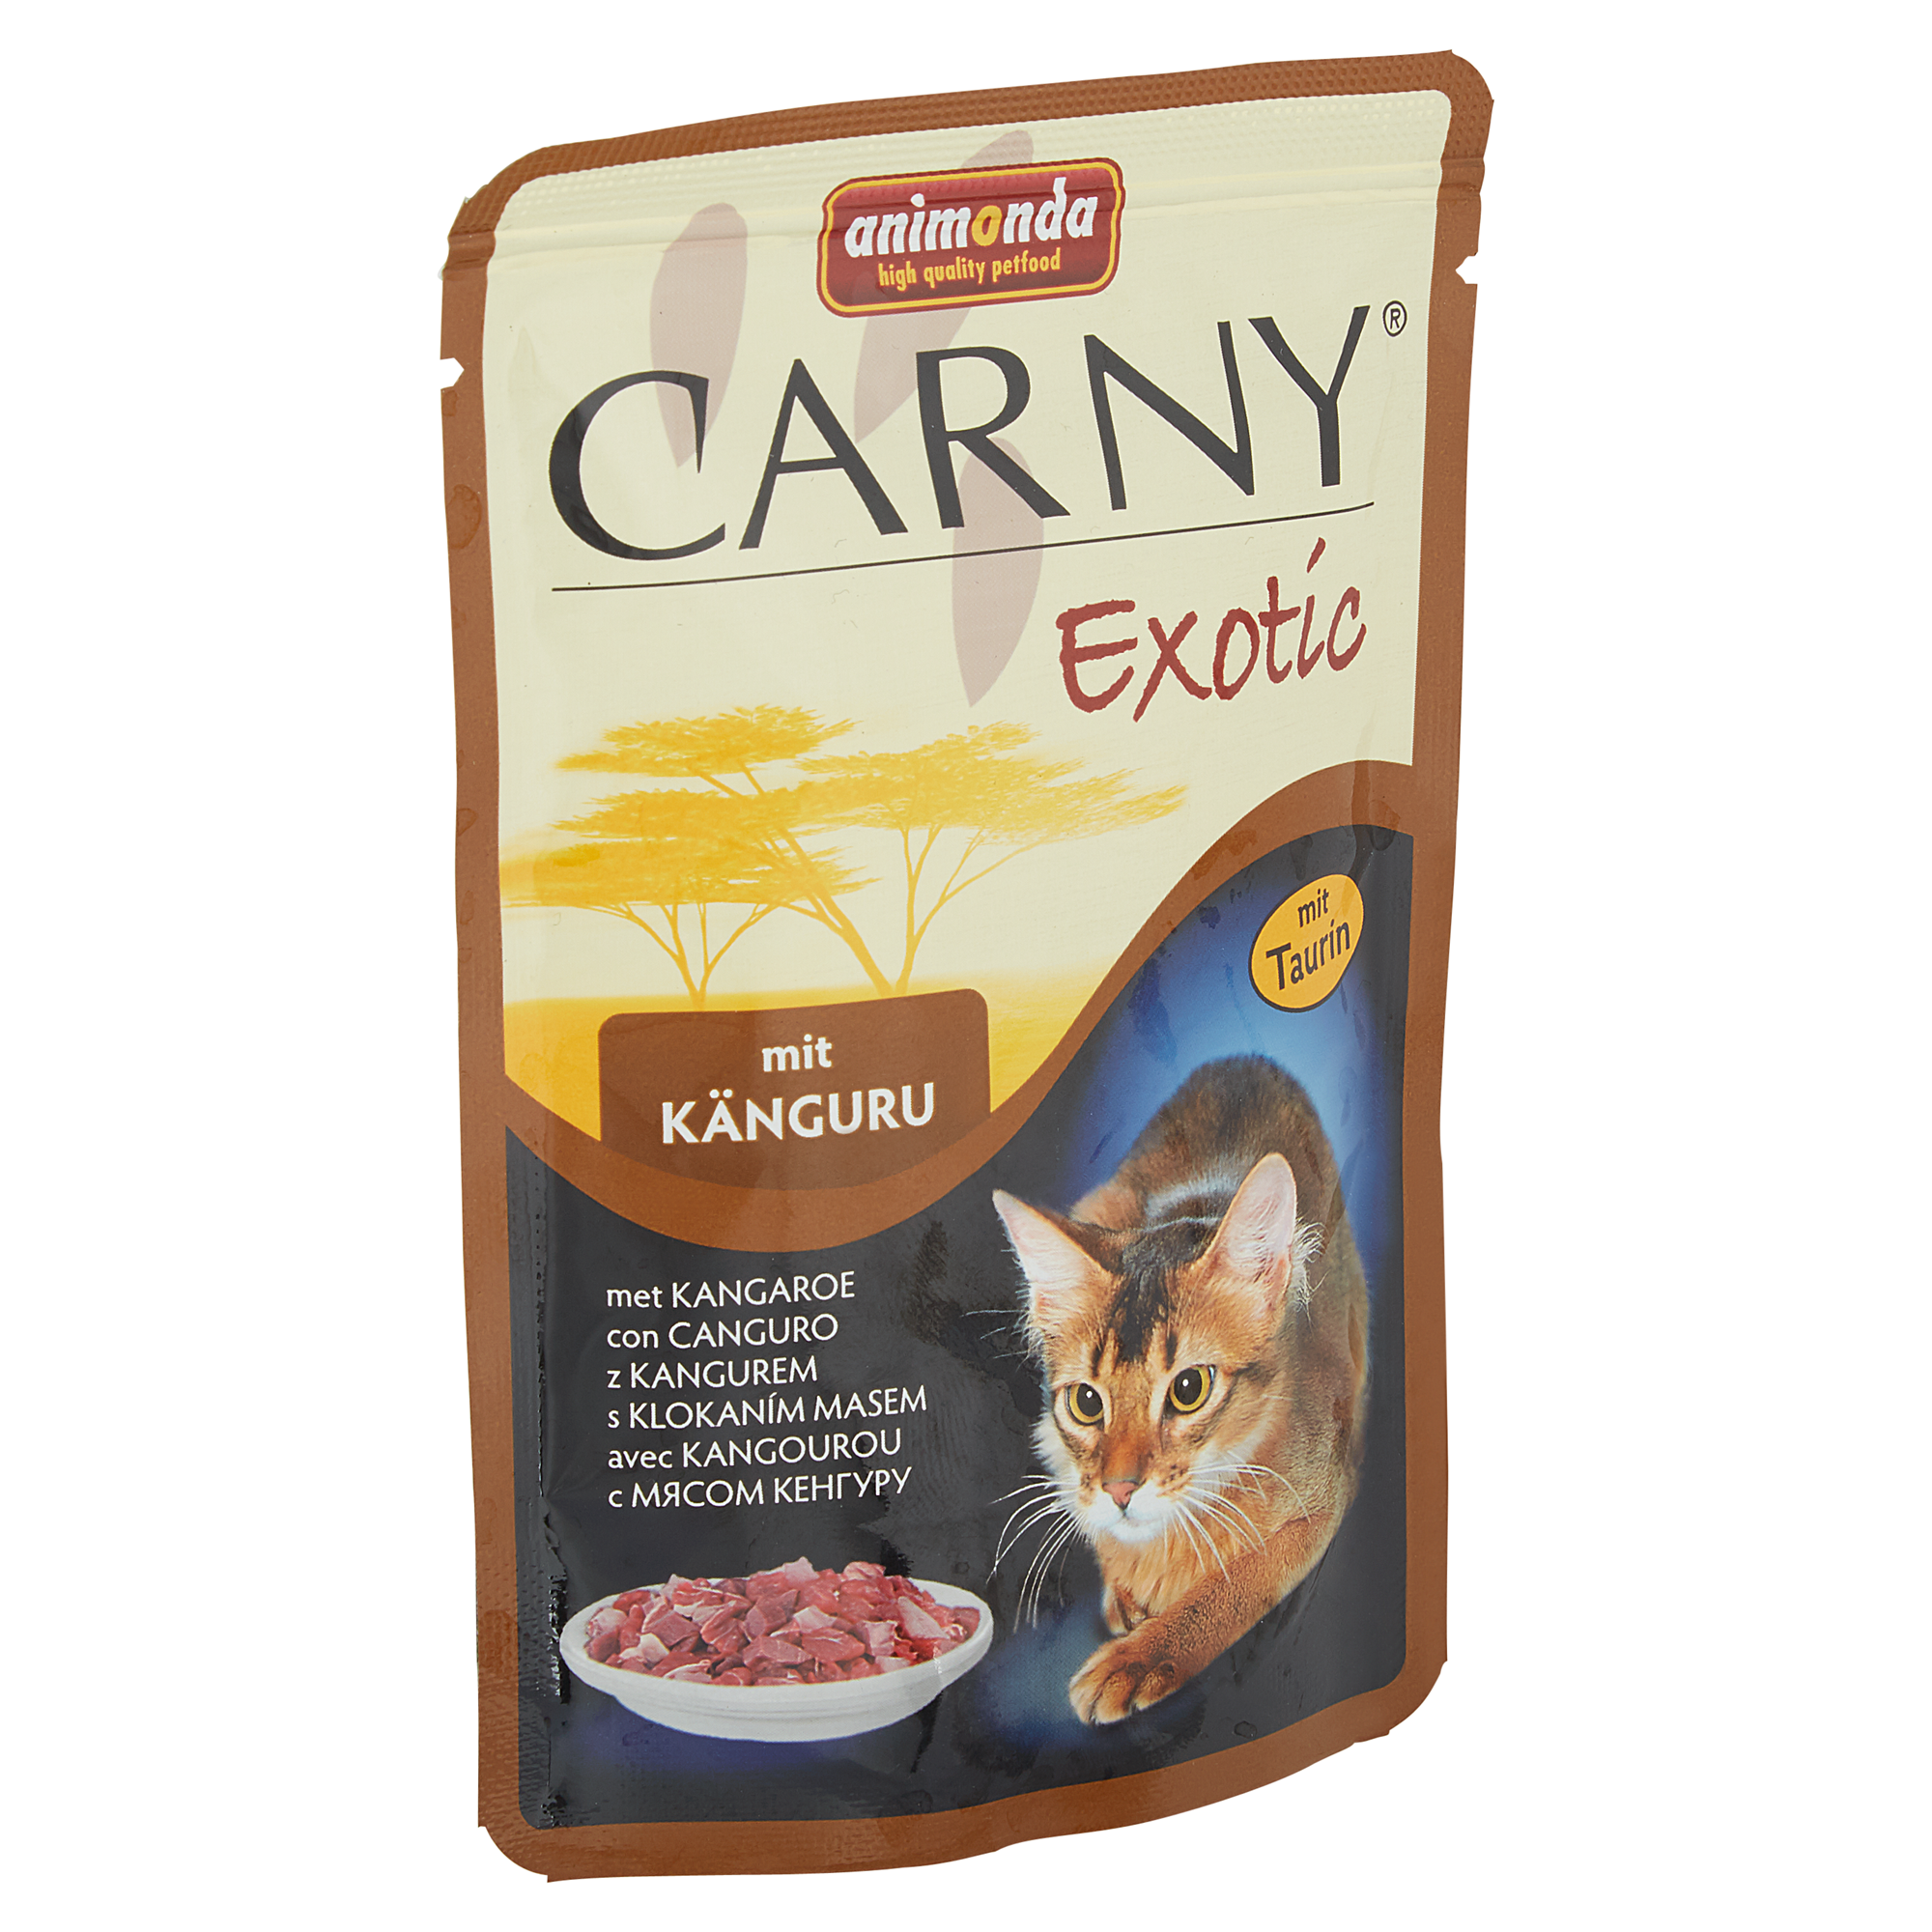 Katzennassfutter "Carny" Exotic mit Känguru 85 g + product picture